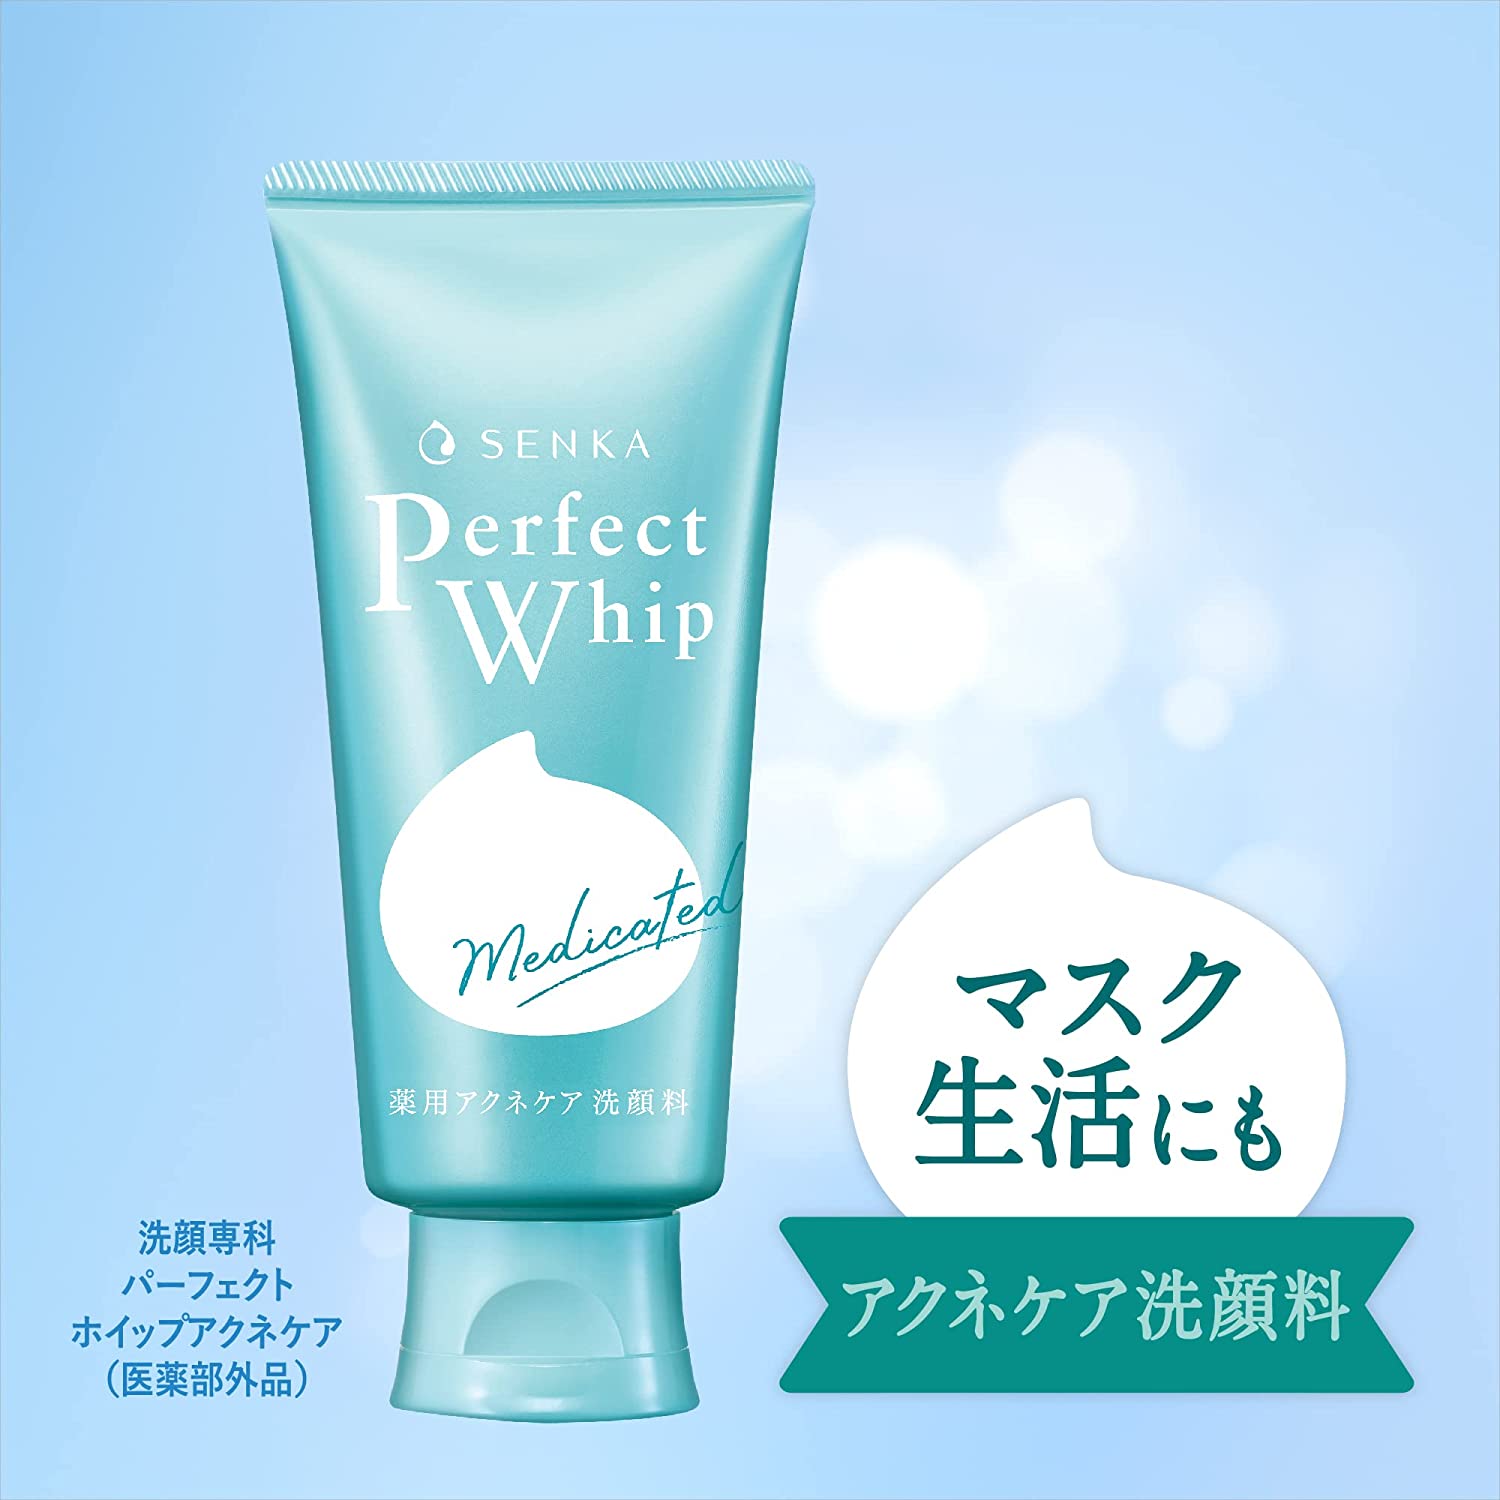 [6-PACK] SHISEIDO Japan SENKA Medicinal Adult Acne Skin Protection Facial Cleanser 150G